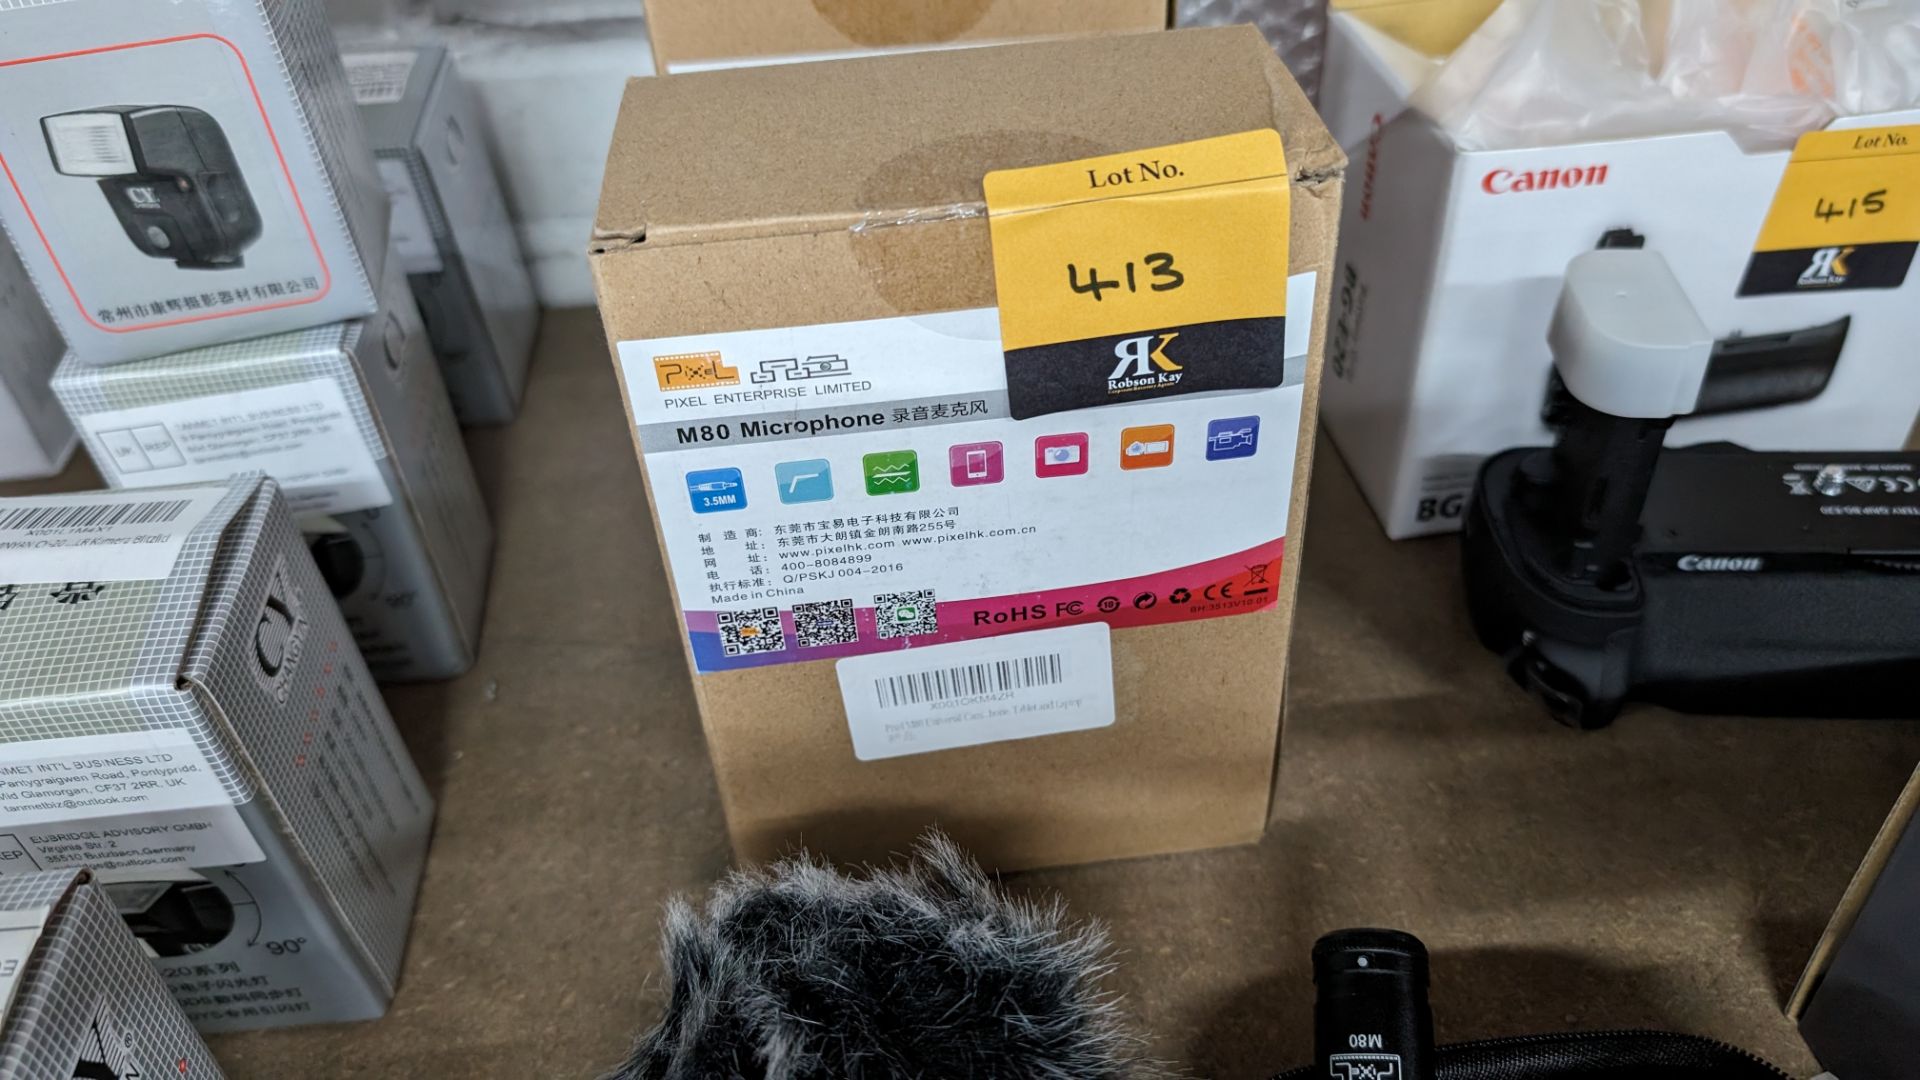 2 off Pixel Enterprise model M80 microphone kits - Image 9 of 16